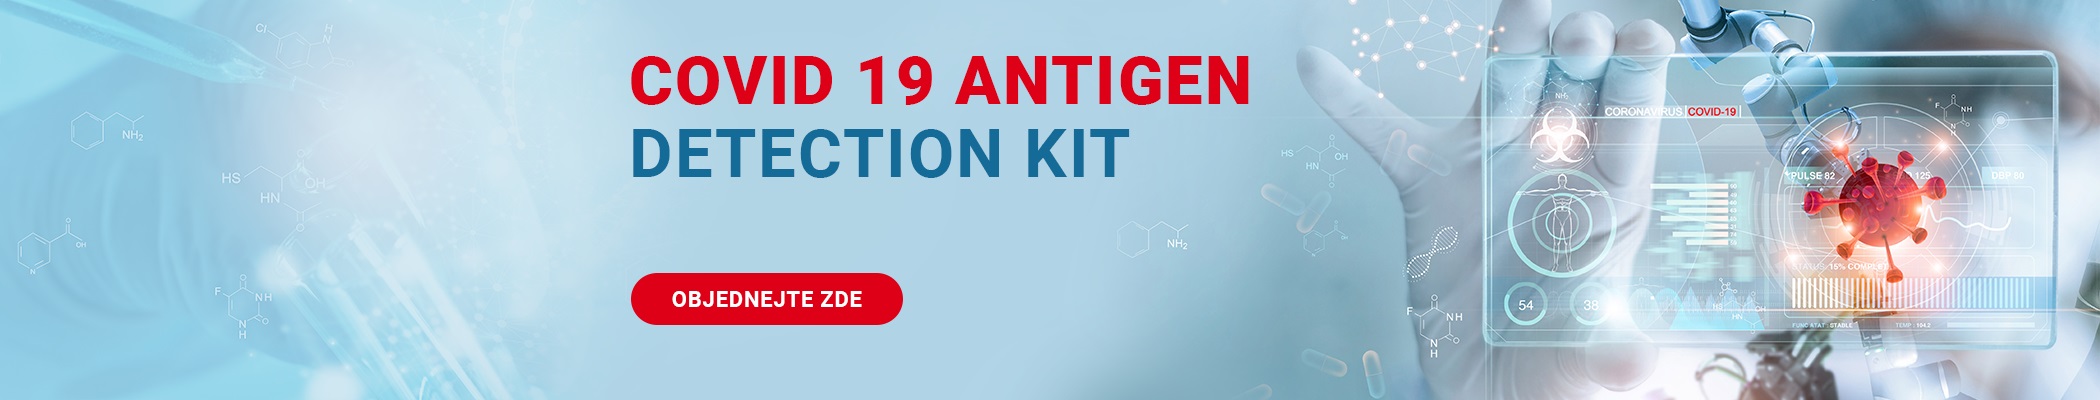 COVID-19 Antigen detection kit